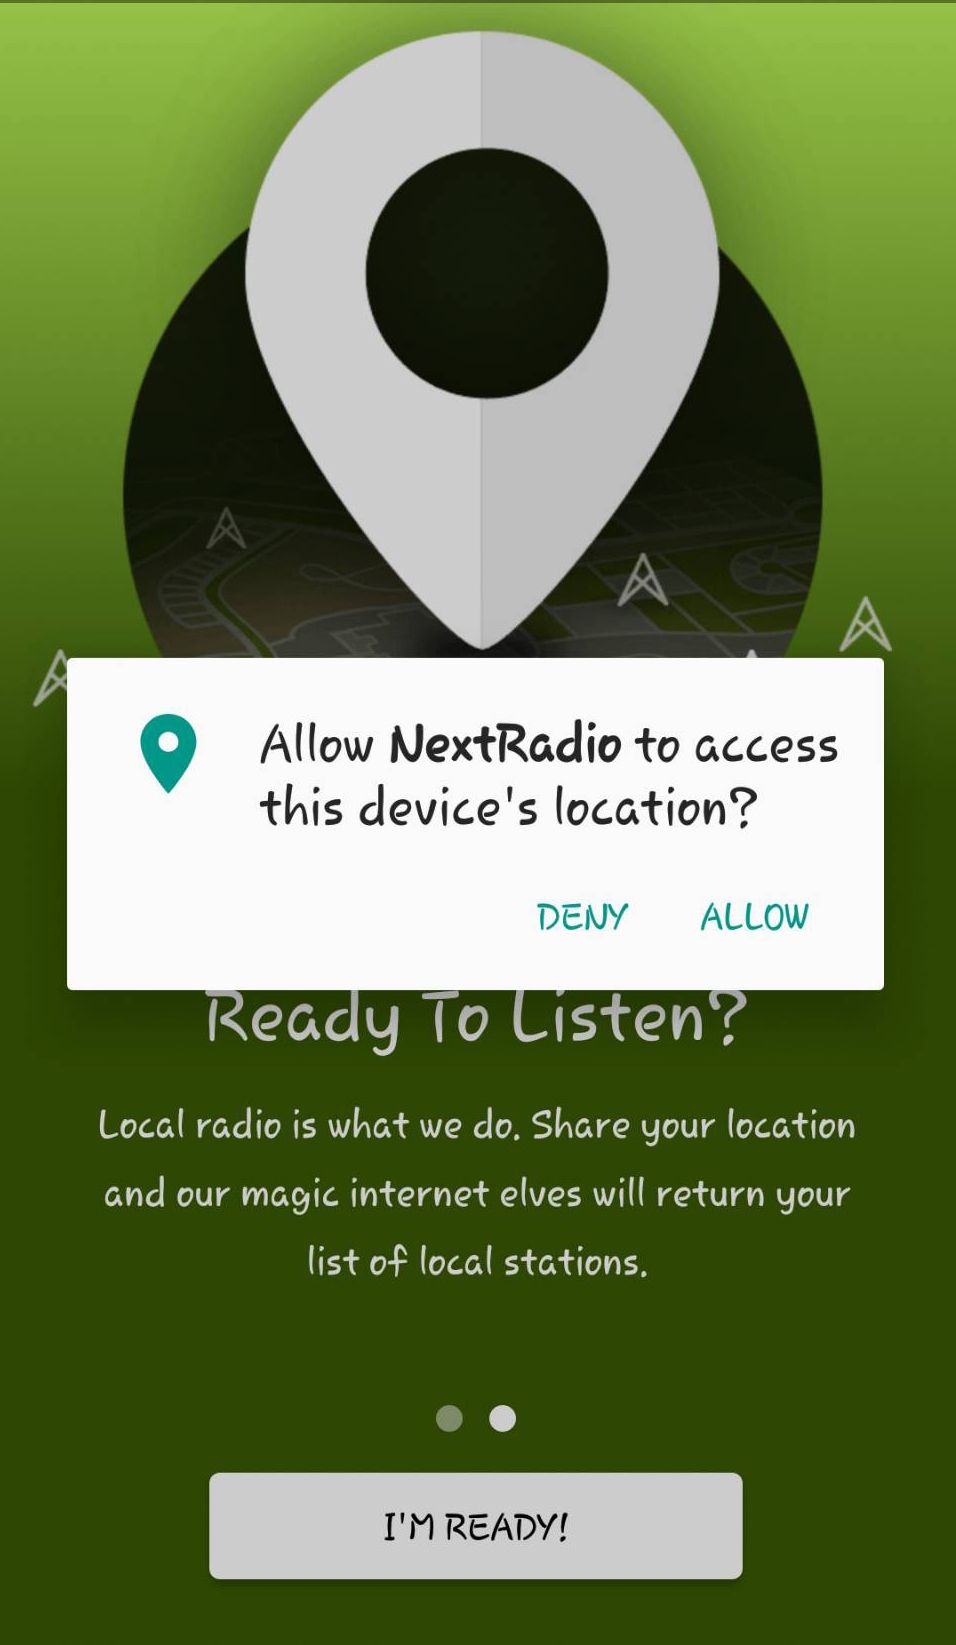 NextRadio location access prompt